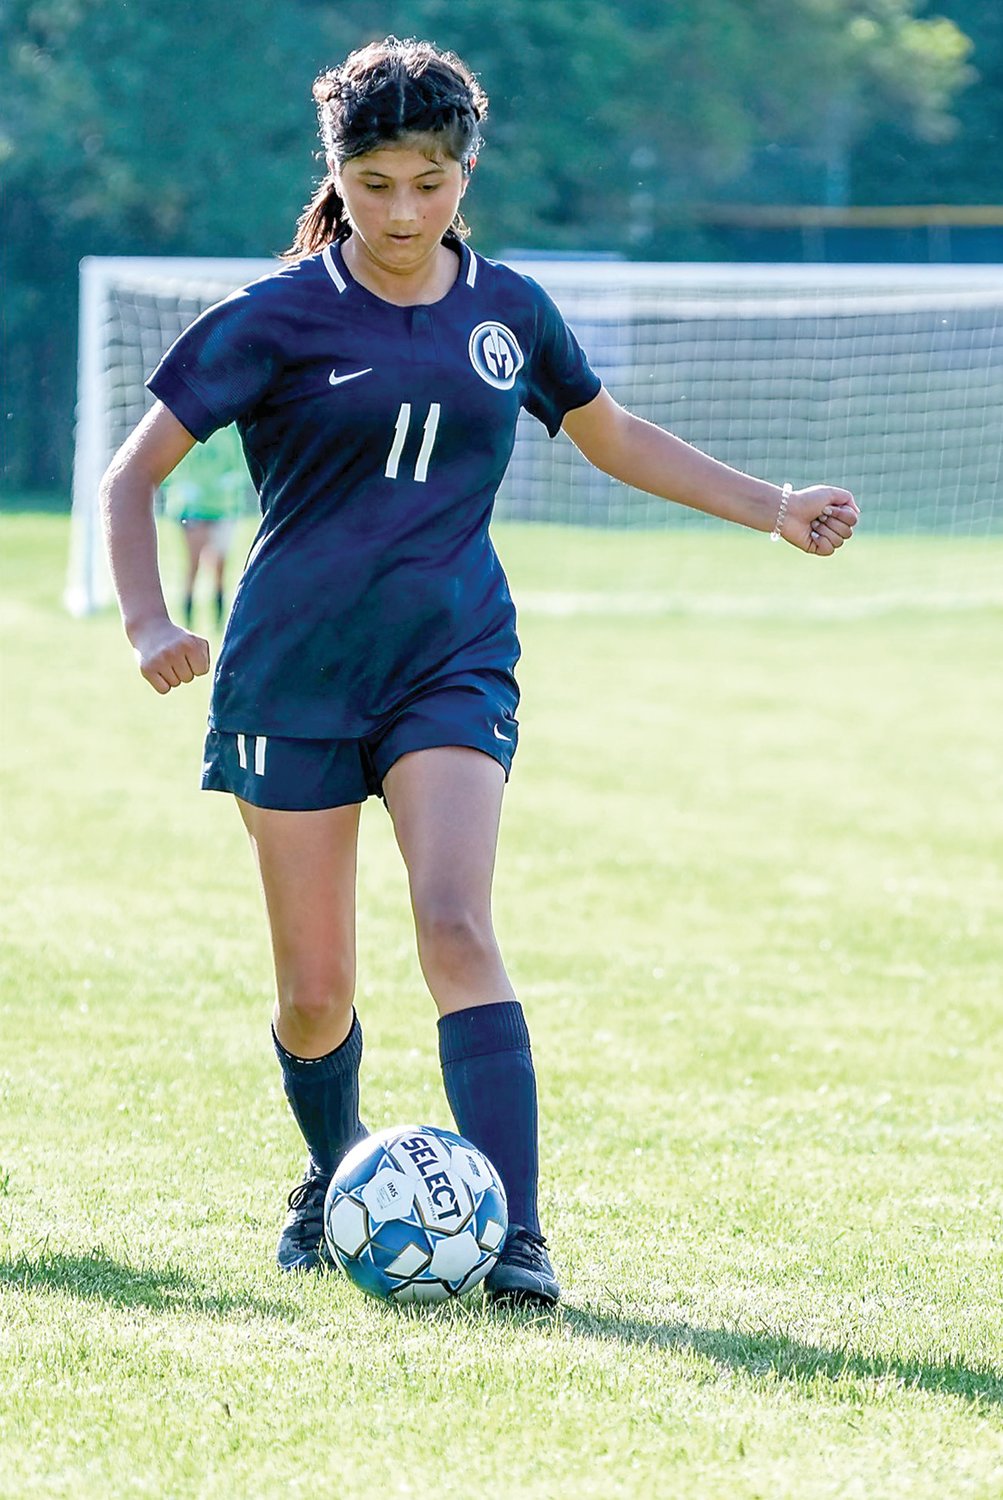 Fatima Daryabi scored three goals for the Solebury School girls soccer team this past fall.